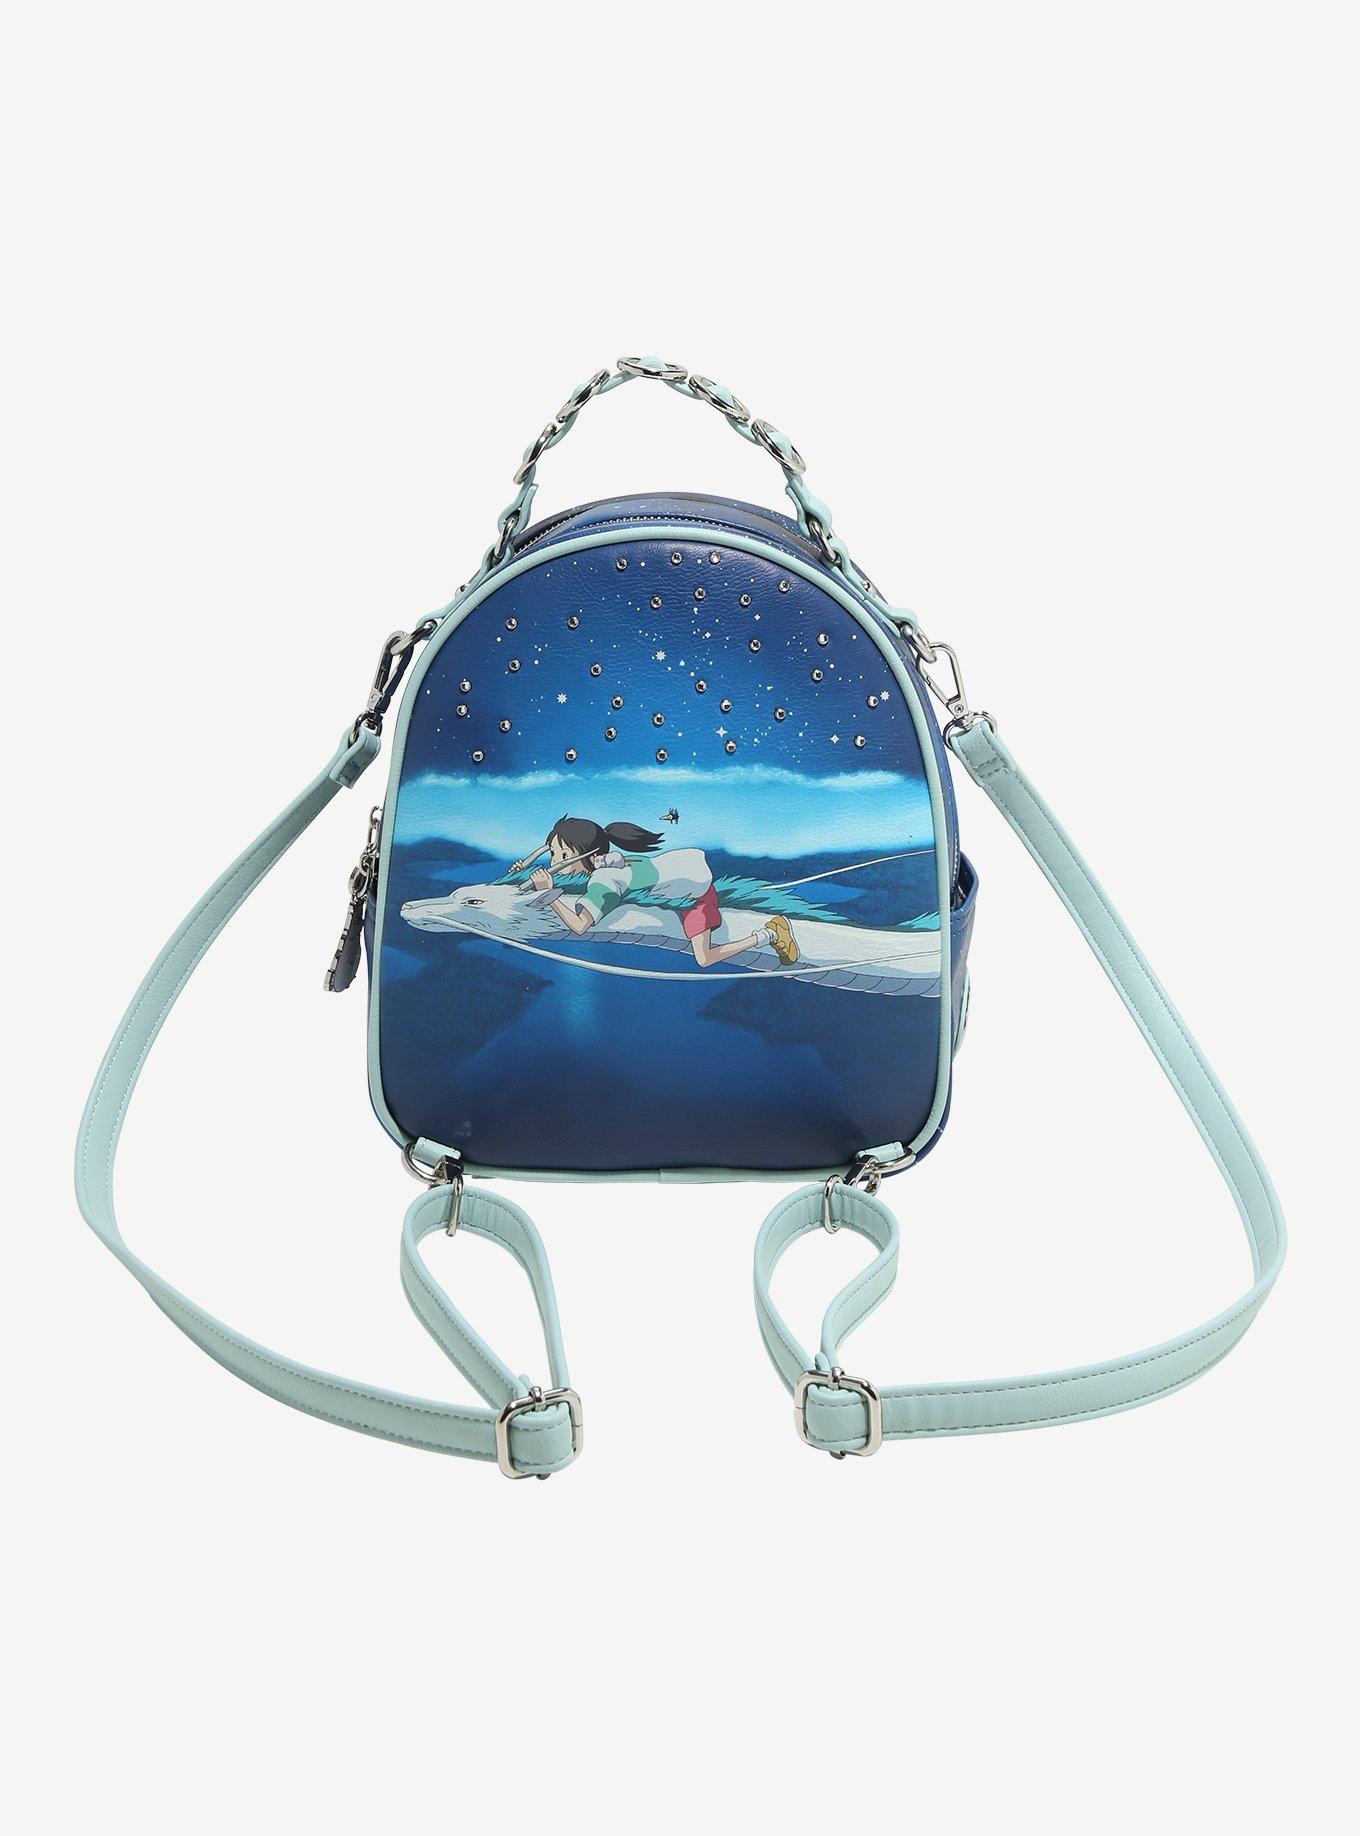 Our Universe Studio Ghibli Spirited Away Chihiro & Haku Reversible Mini Backpack - BoxLunch Exclusive, , alternate